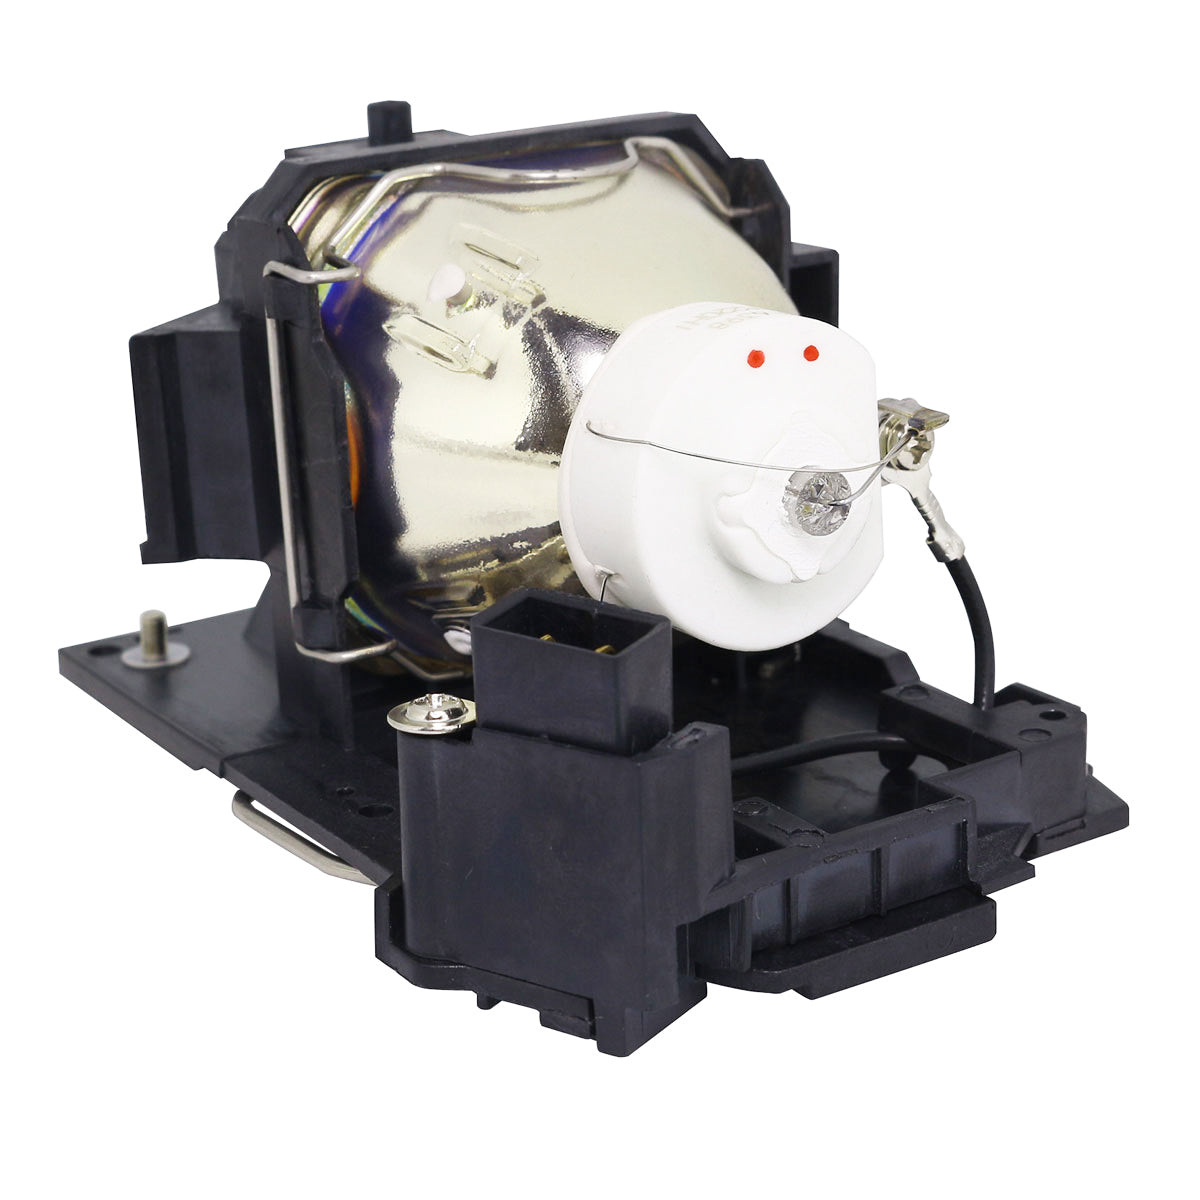 Hitachi DT01381 Ushio Projector Lamp Module